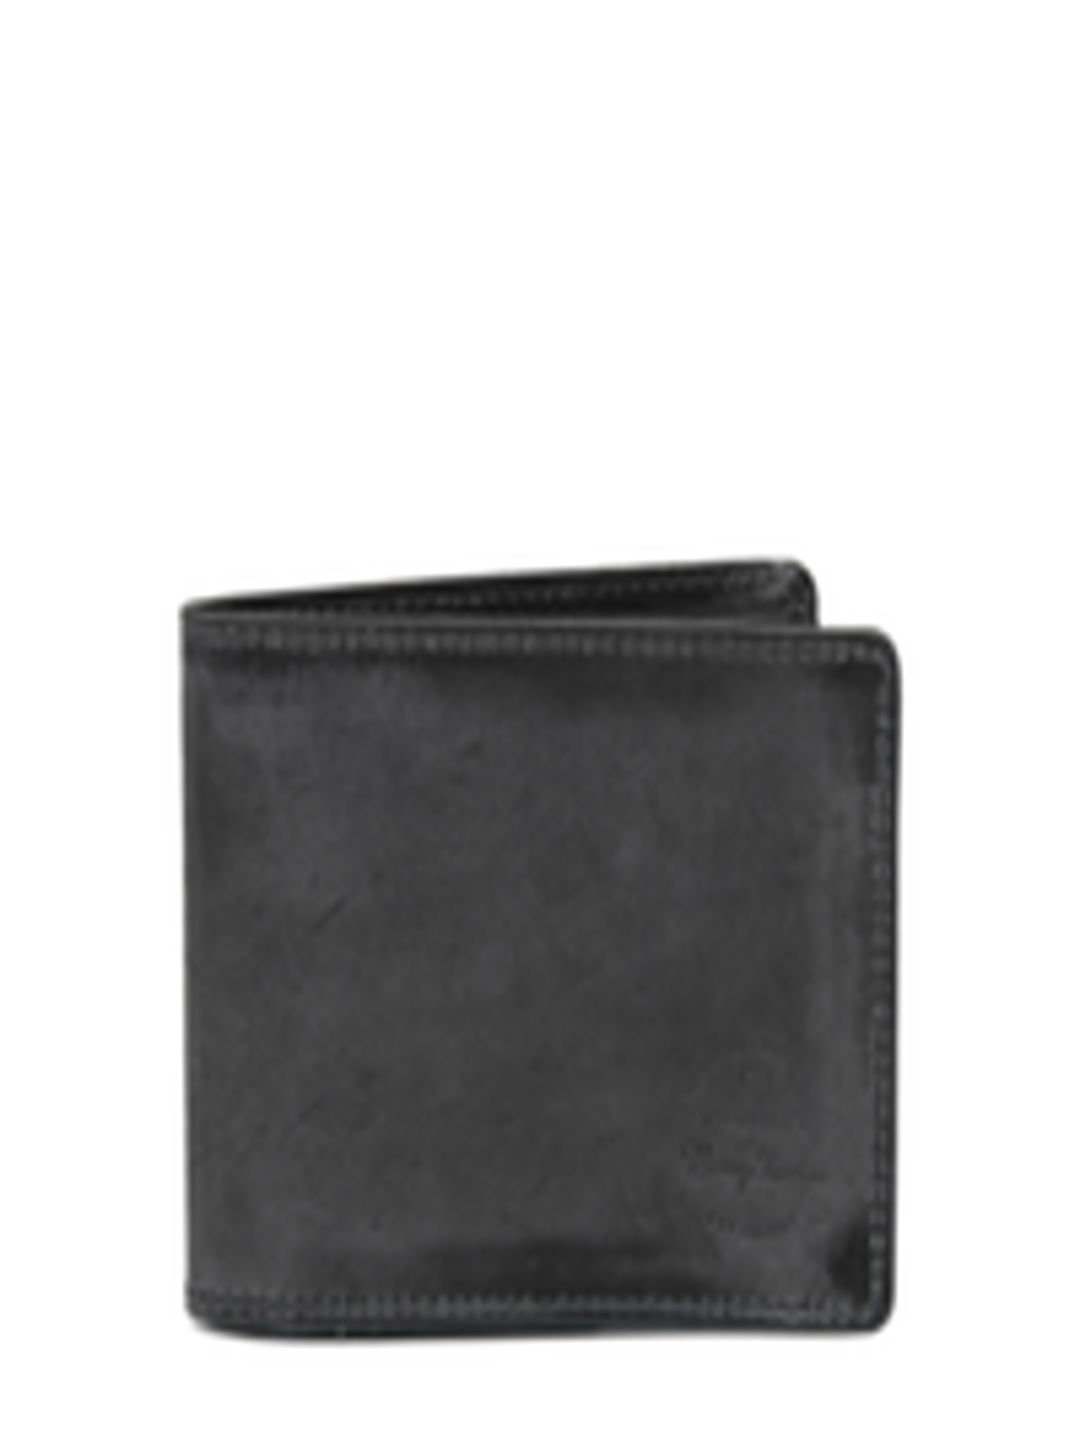 Buy Being Human Clothing Men Black Leather Wallet - Wallets for Men